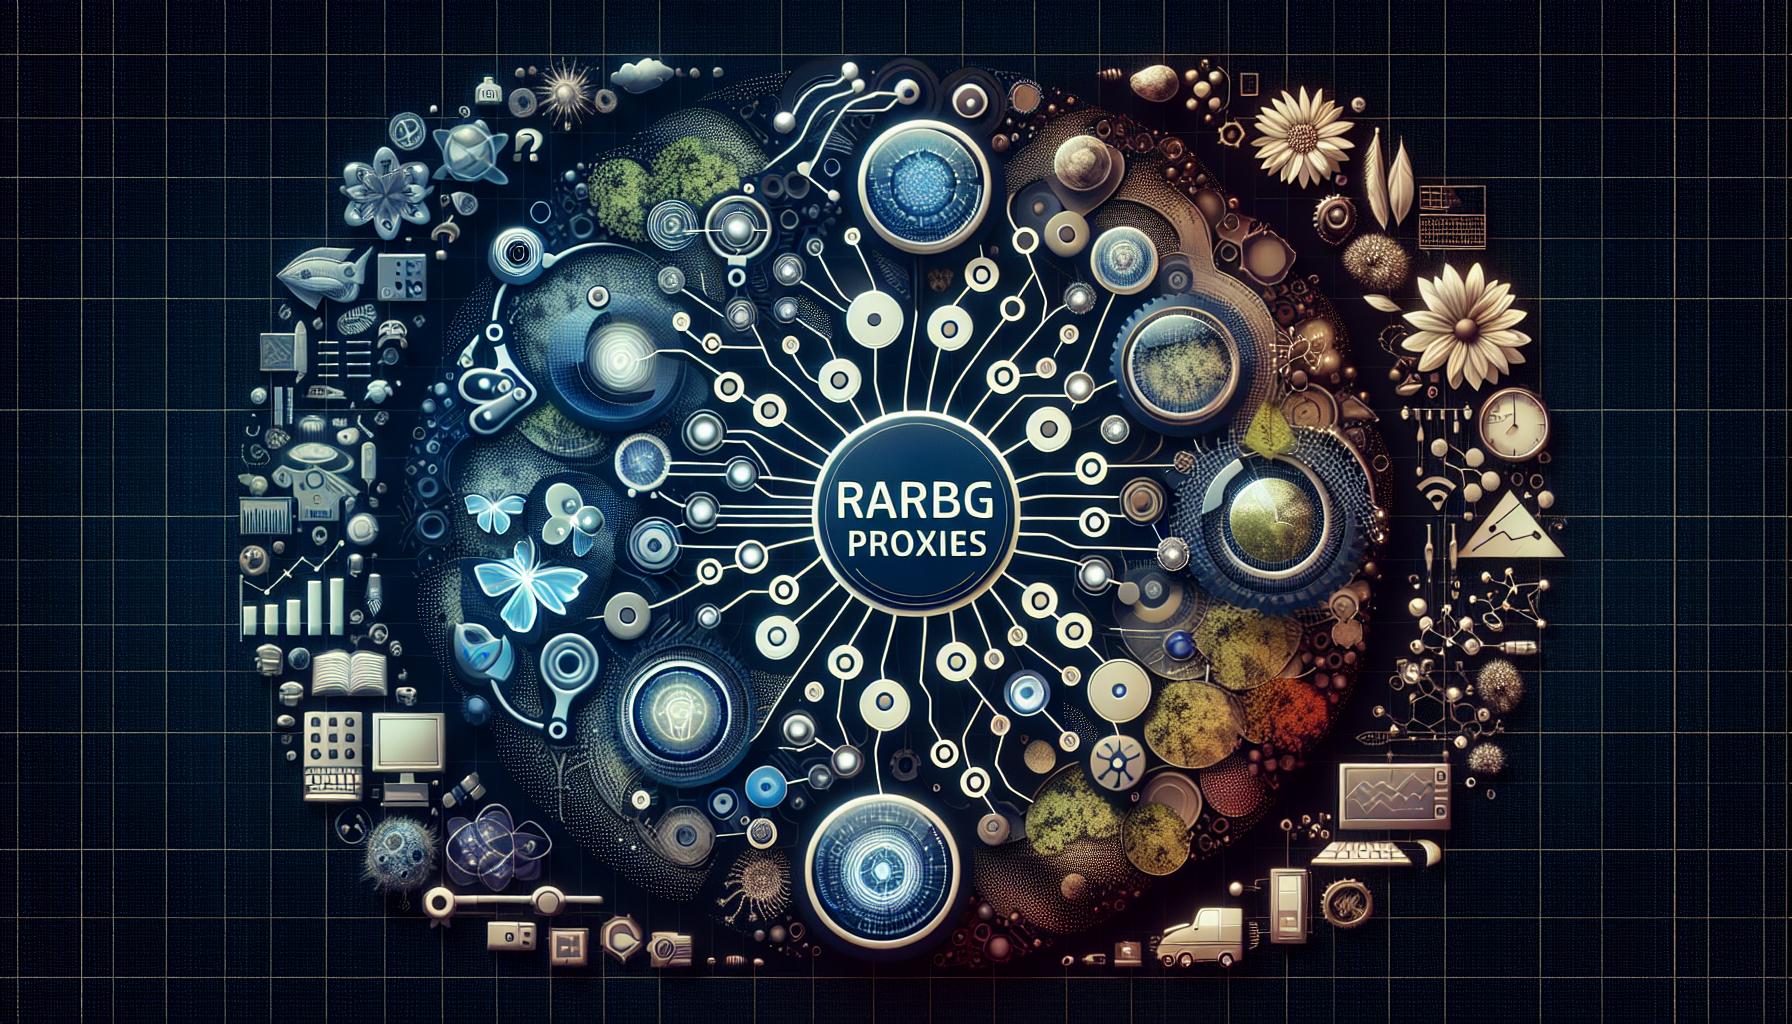 What is rarbg proxies?